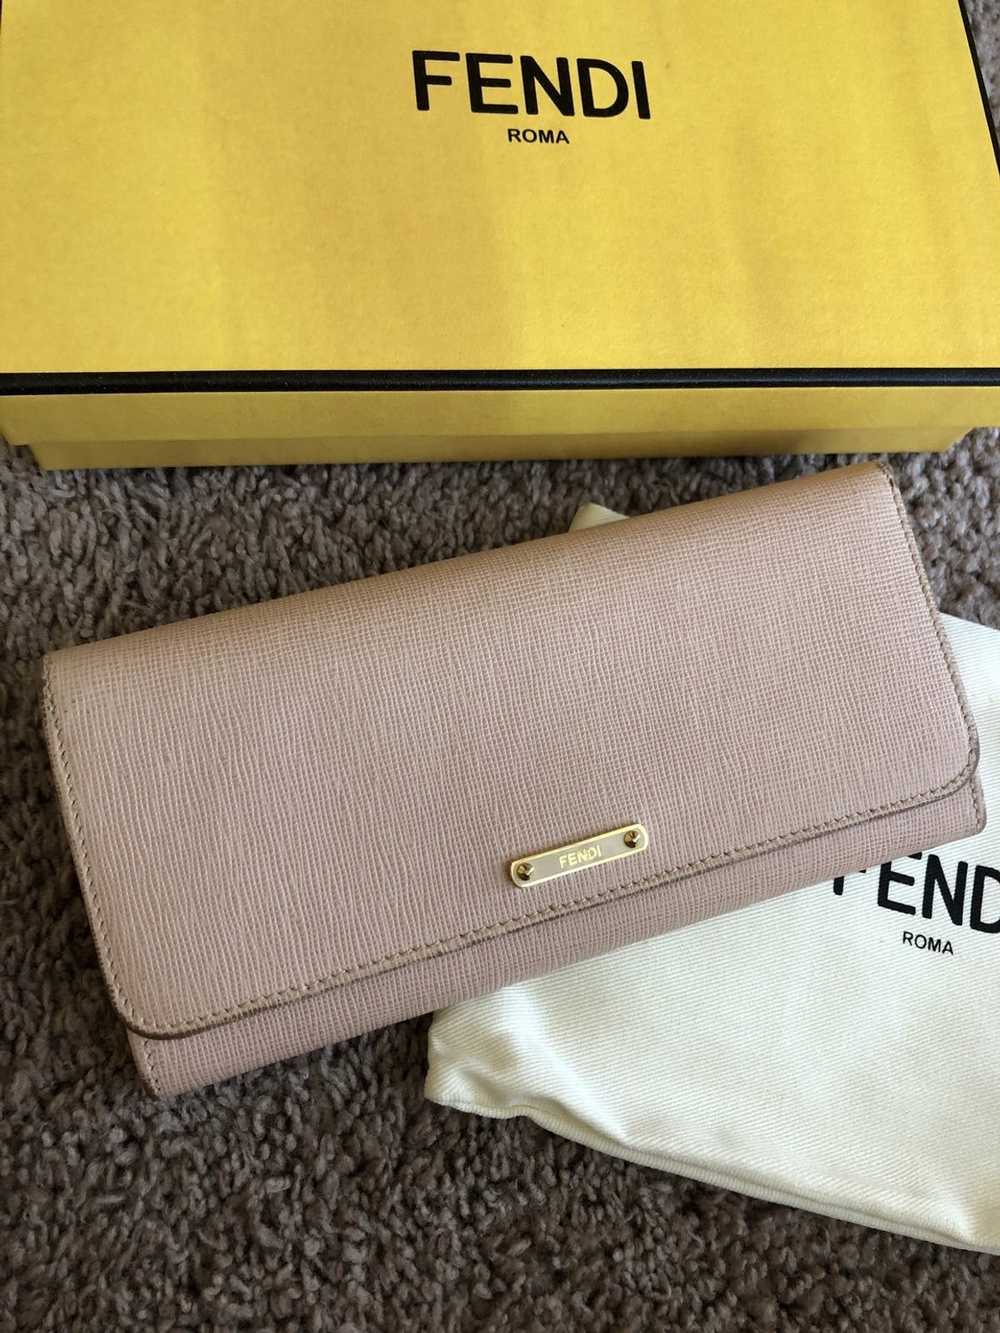 Fendi Fendi pink leather logo long wallet - image 2